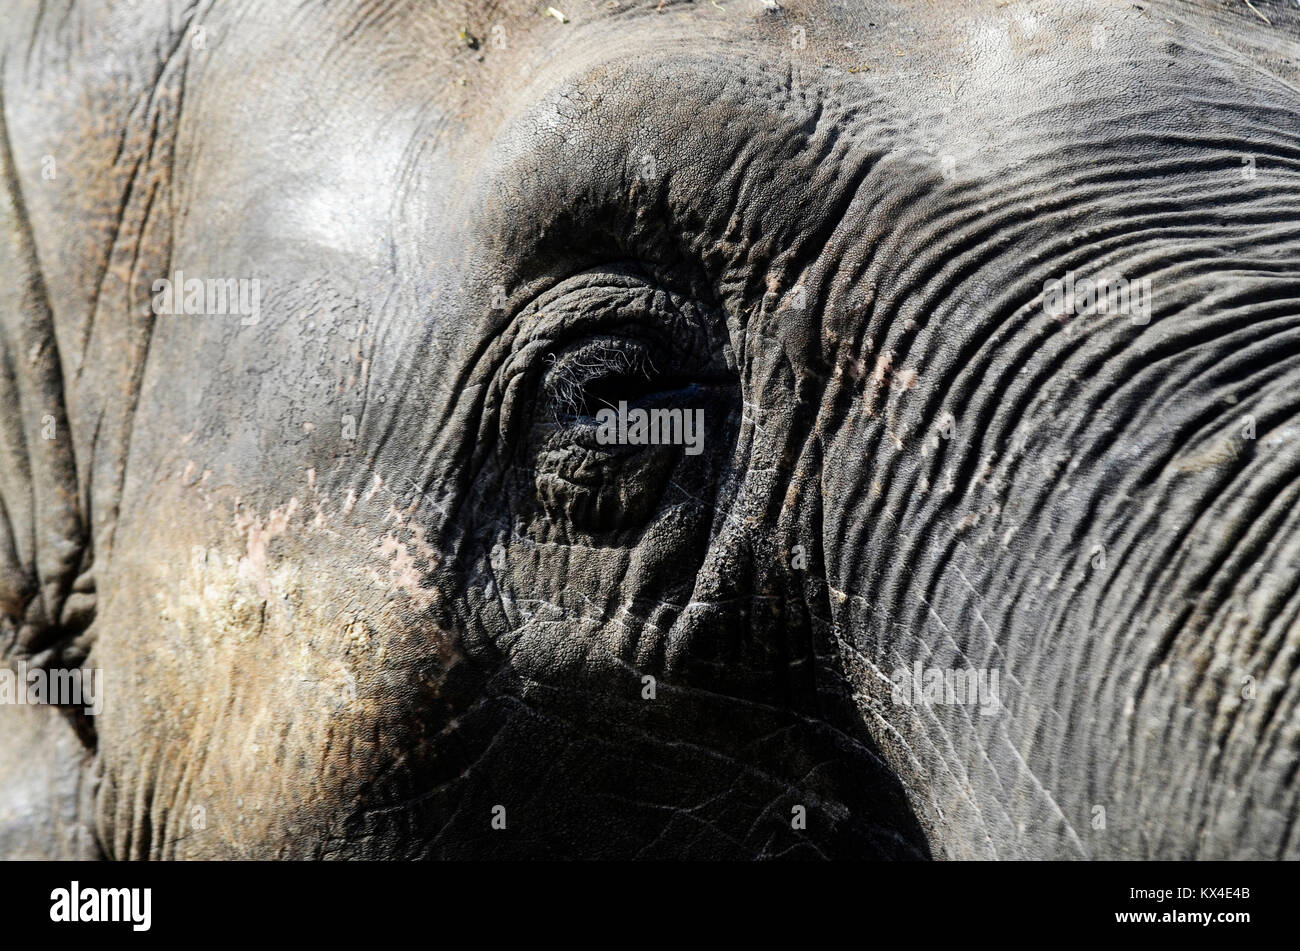 Elephant in the zoo Stock Photo